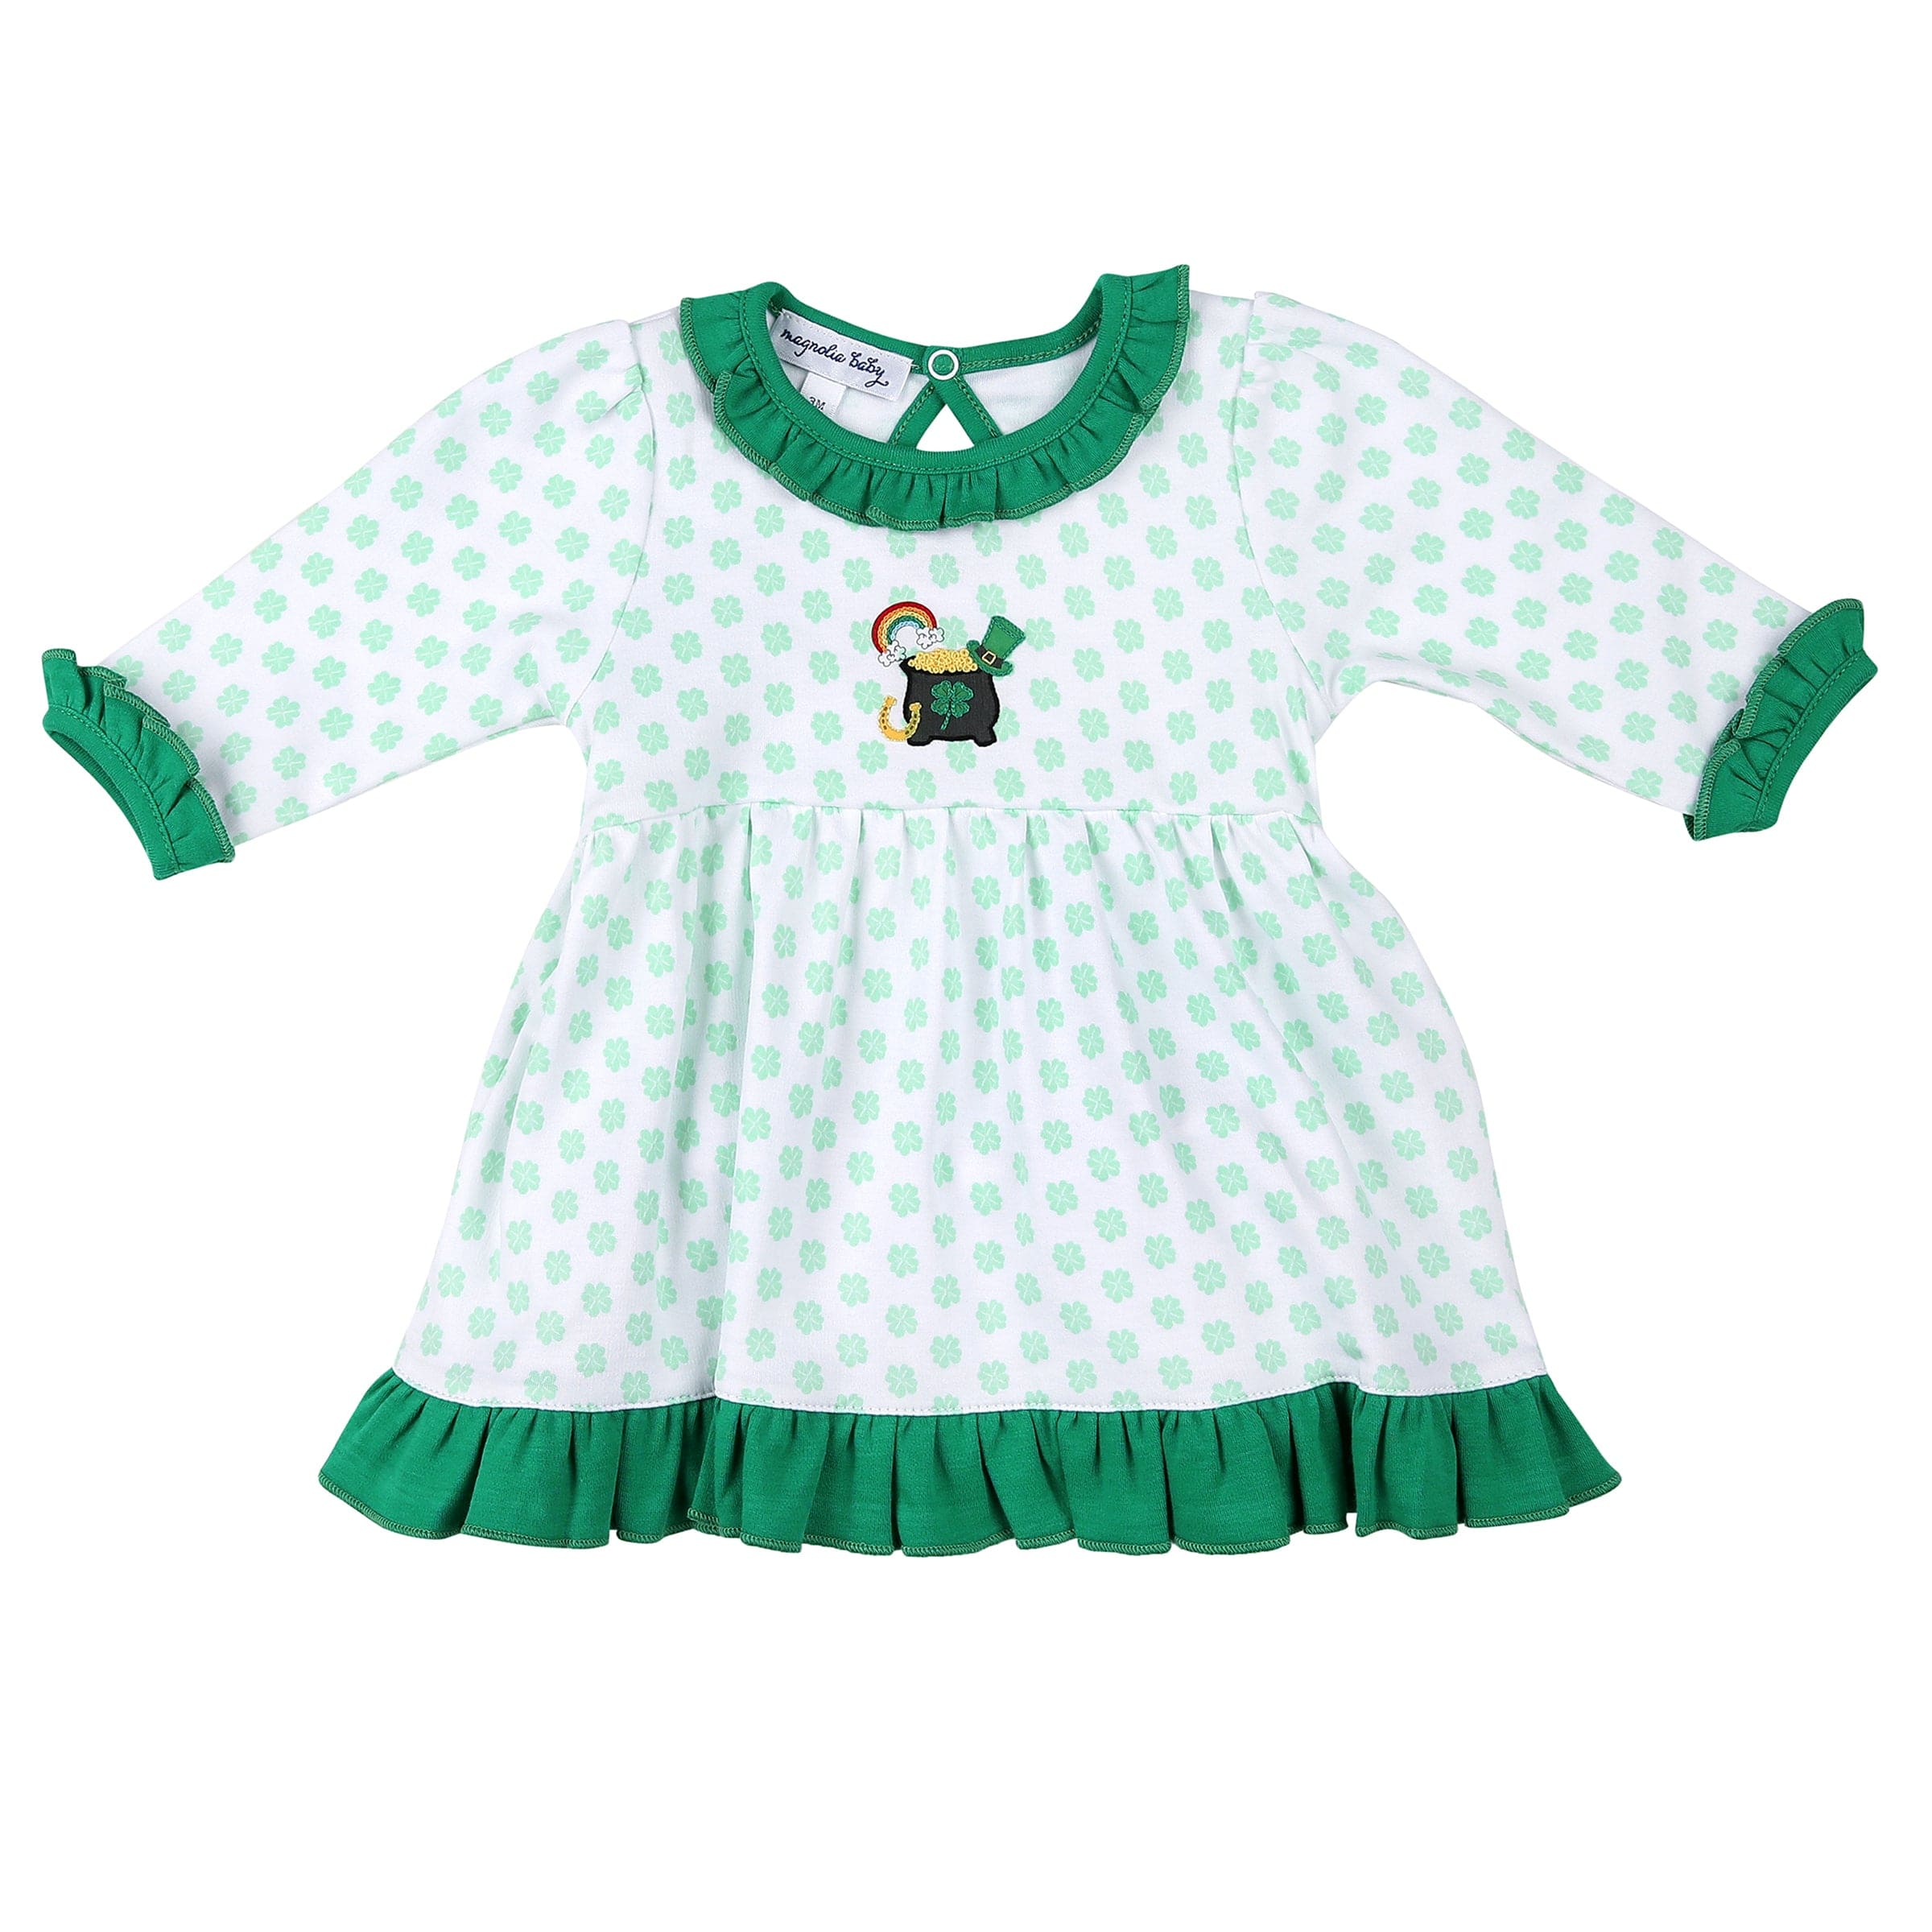 MAGNOLIA BABY - Shenanigans Embroidered Dress Set - Green